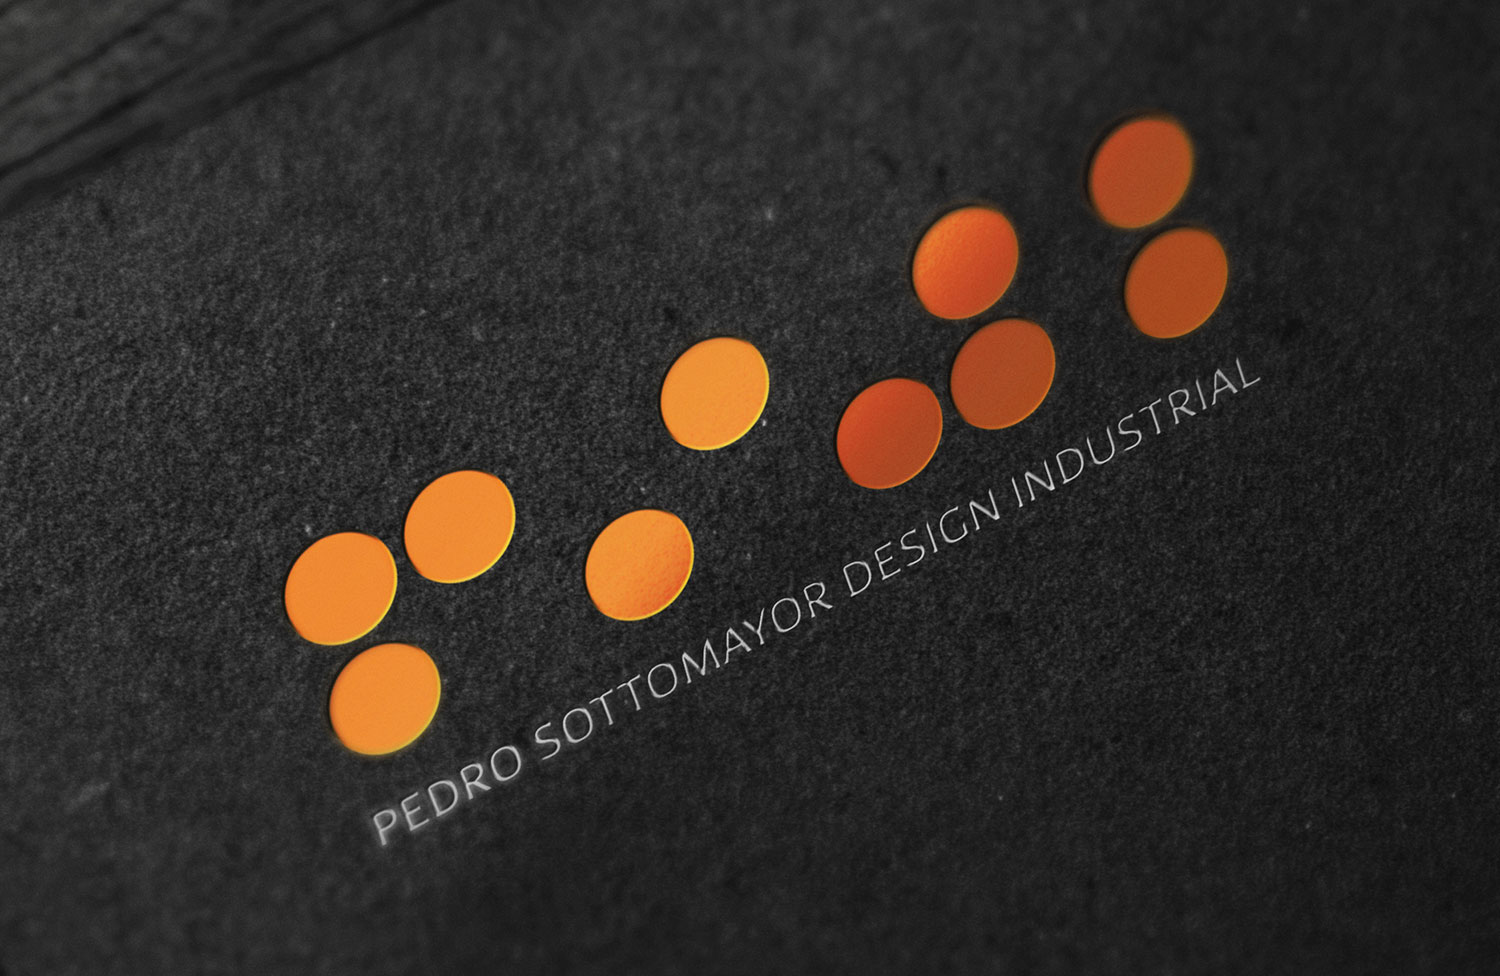 Pedro Sottomayor Design Industrial